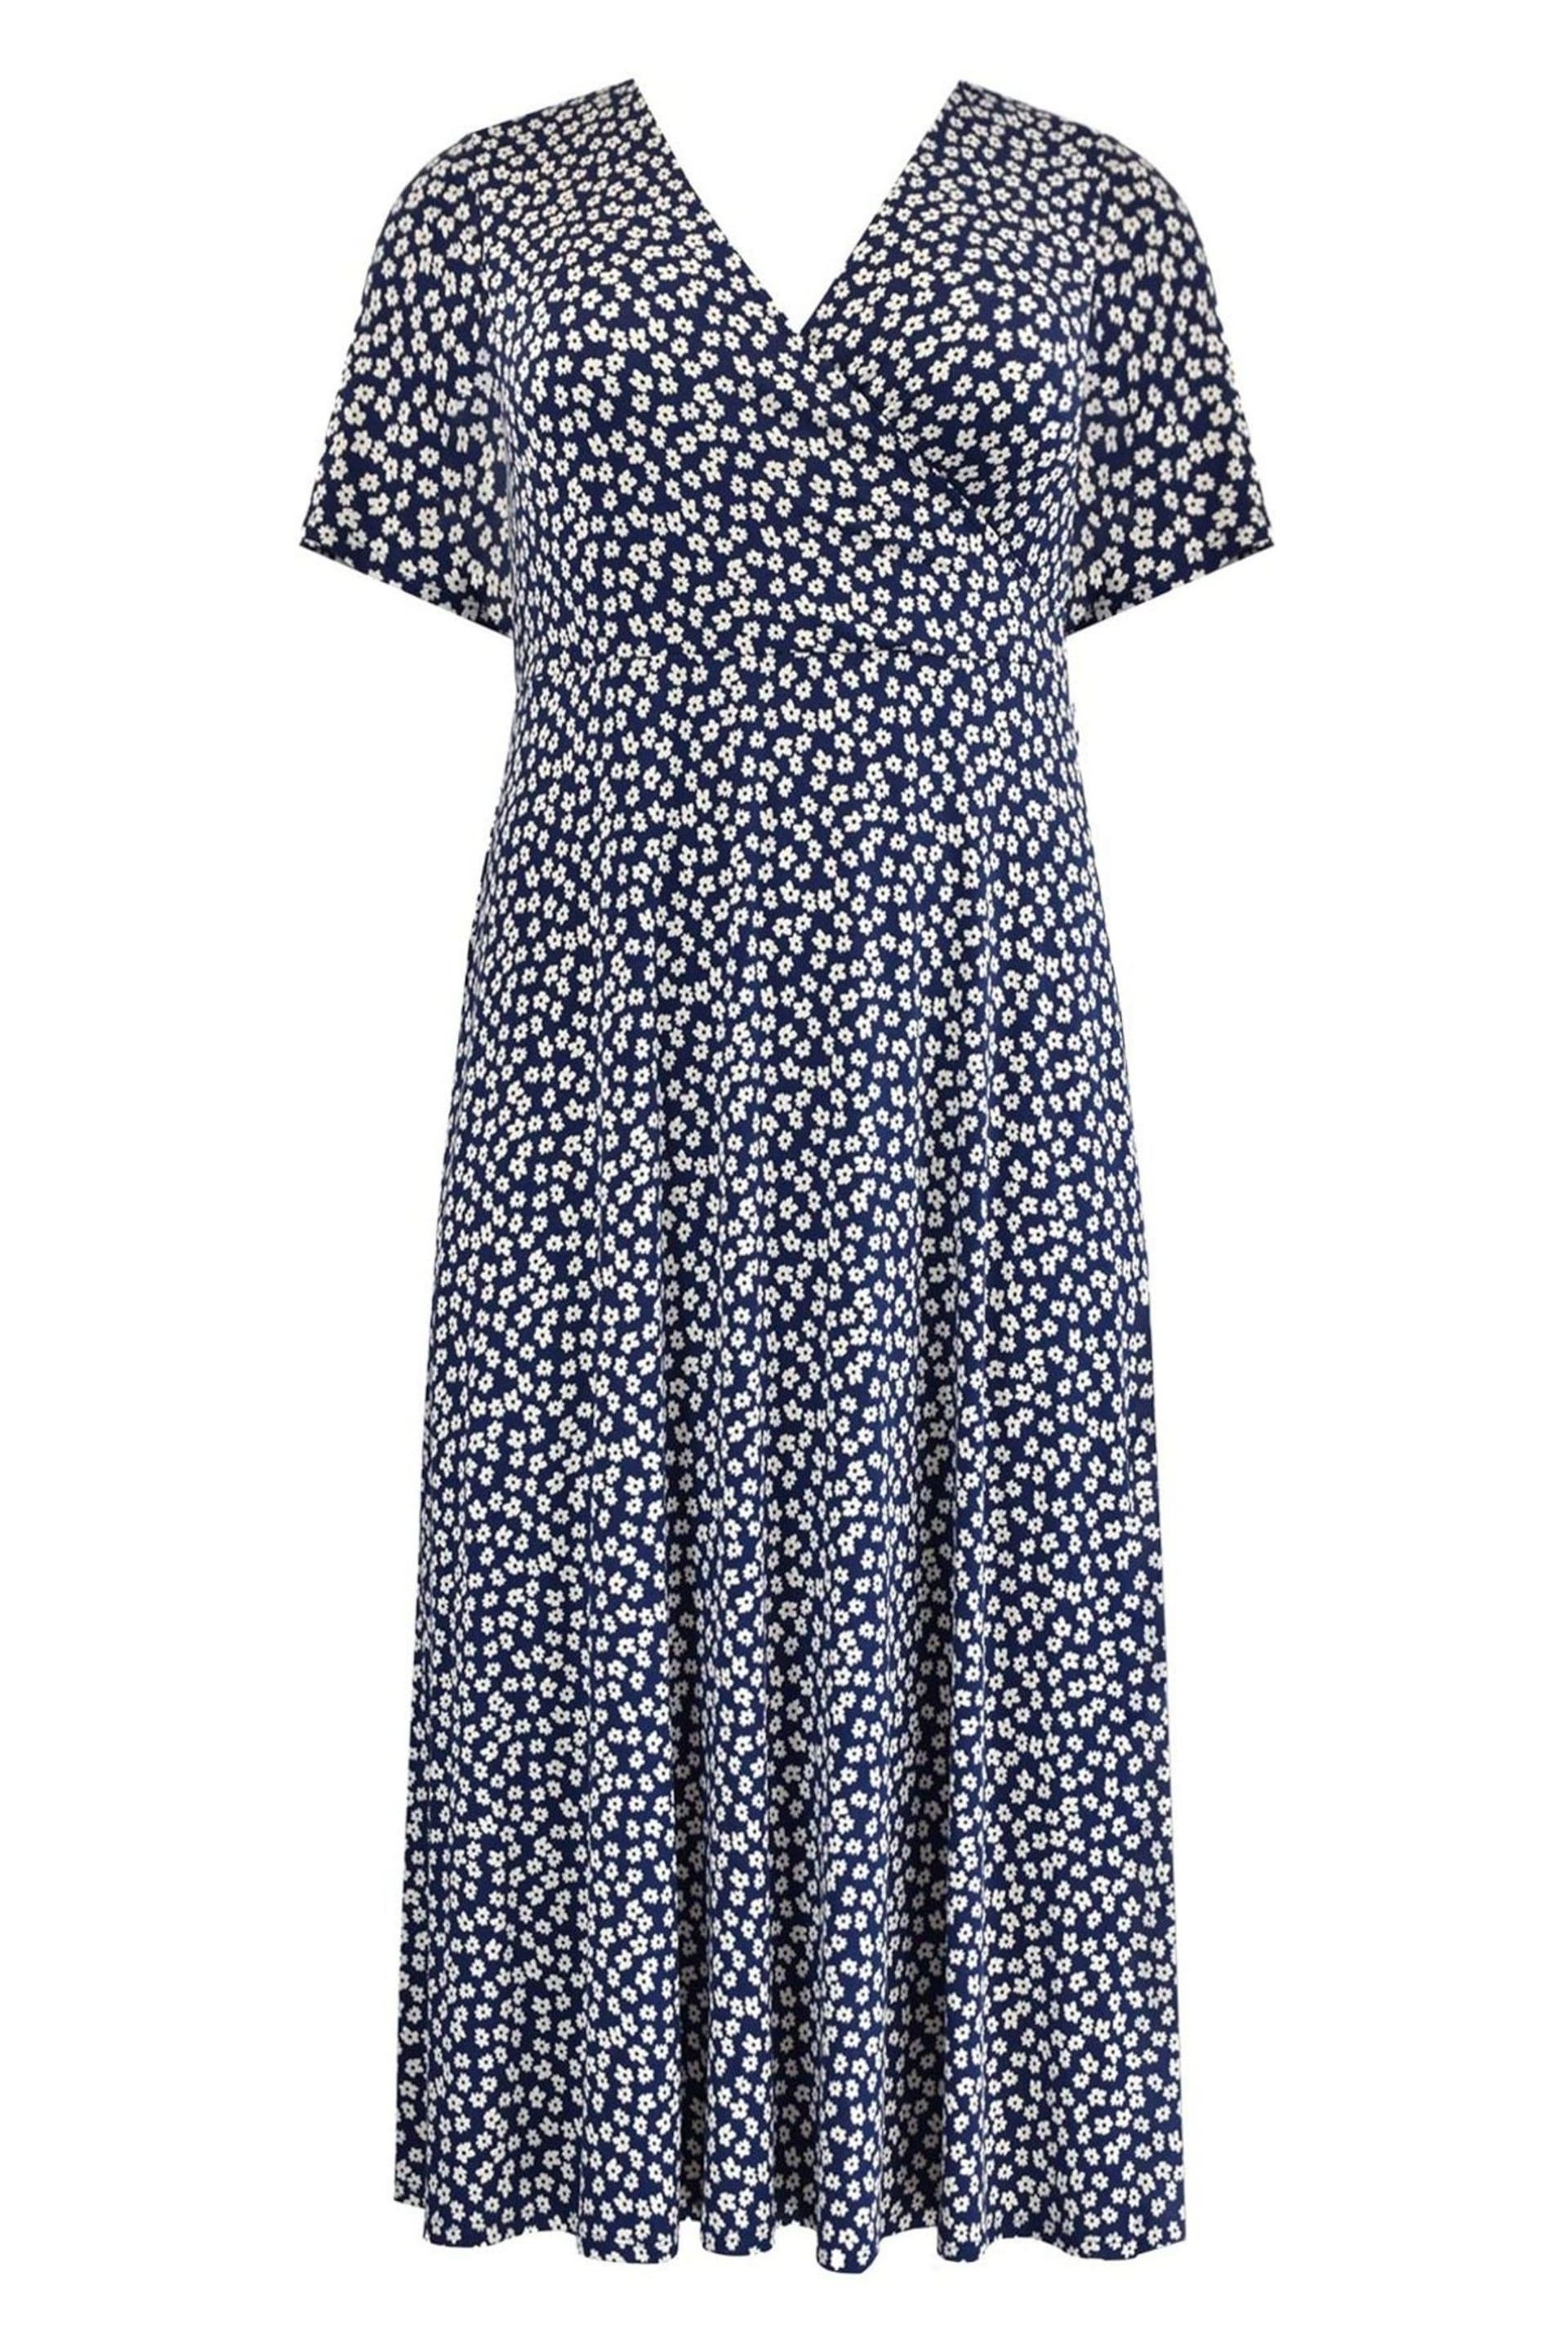 Live Unlimited Curve Blue Petite Ditsy Print Jersey Wrap Midi Dress - Image 4 of 4